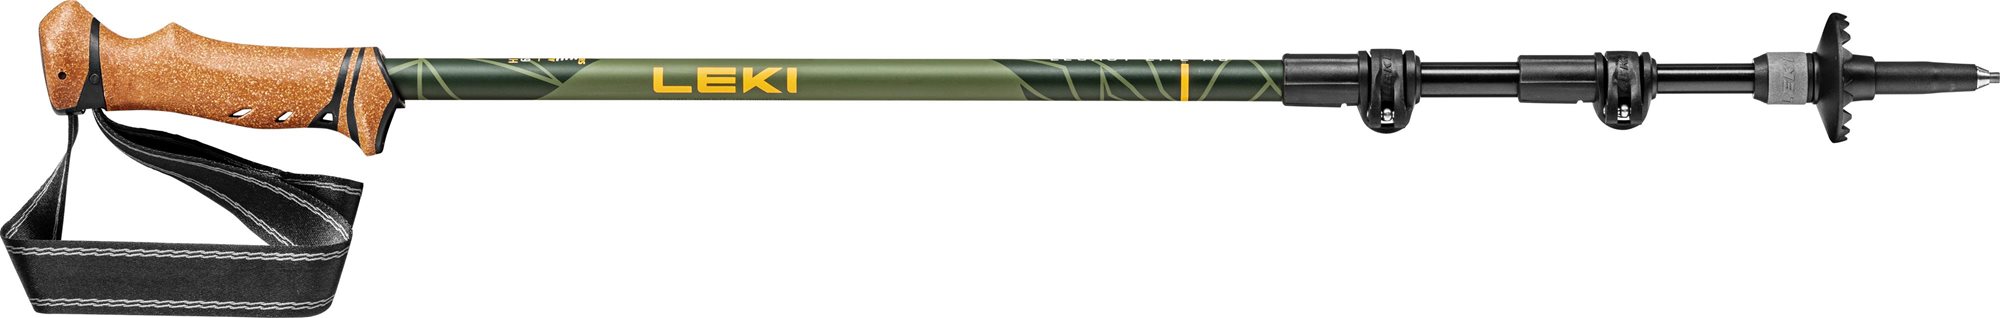 Leki Legacy Lite AS mango-olivgreen-bottlegreen 100 - 135 cm